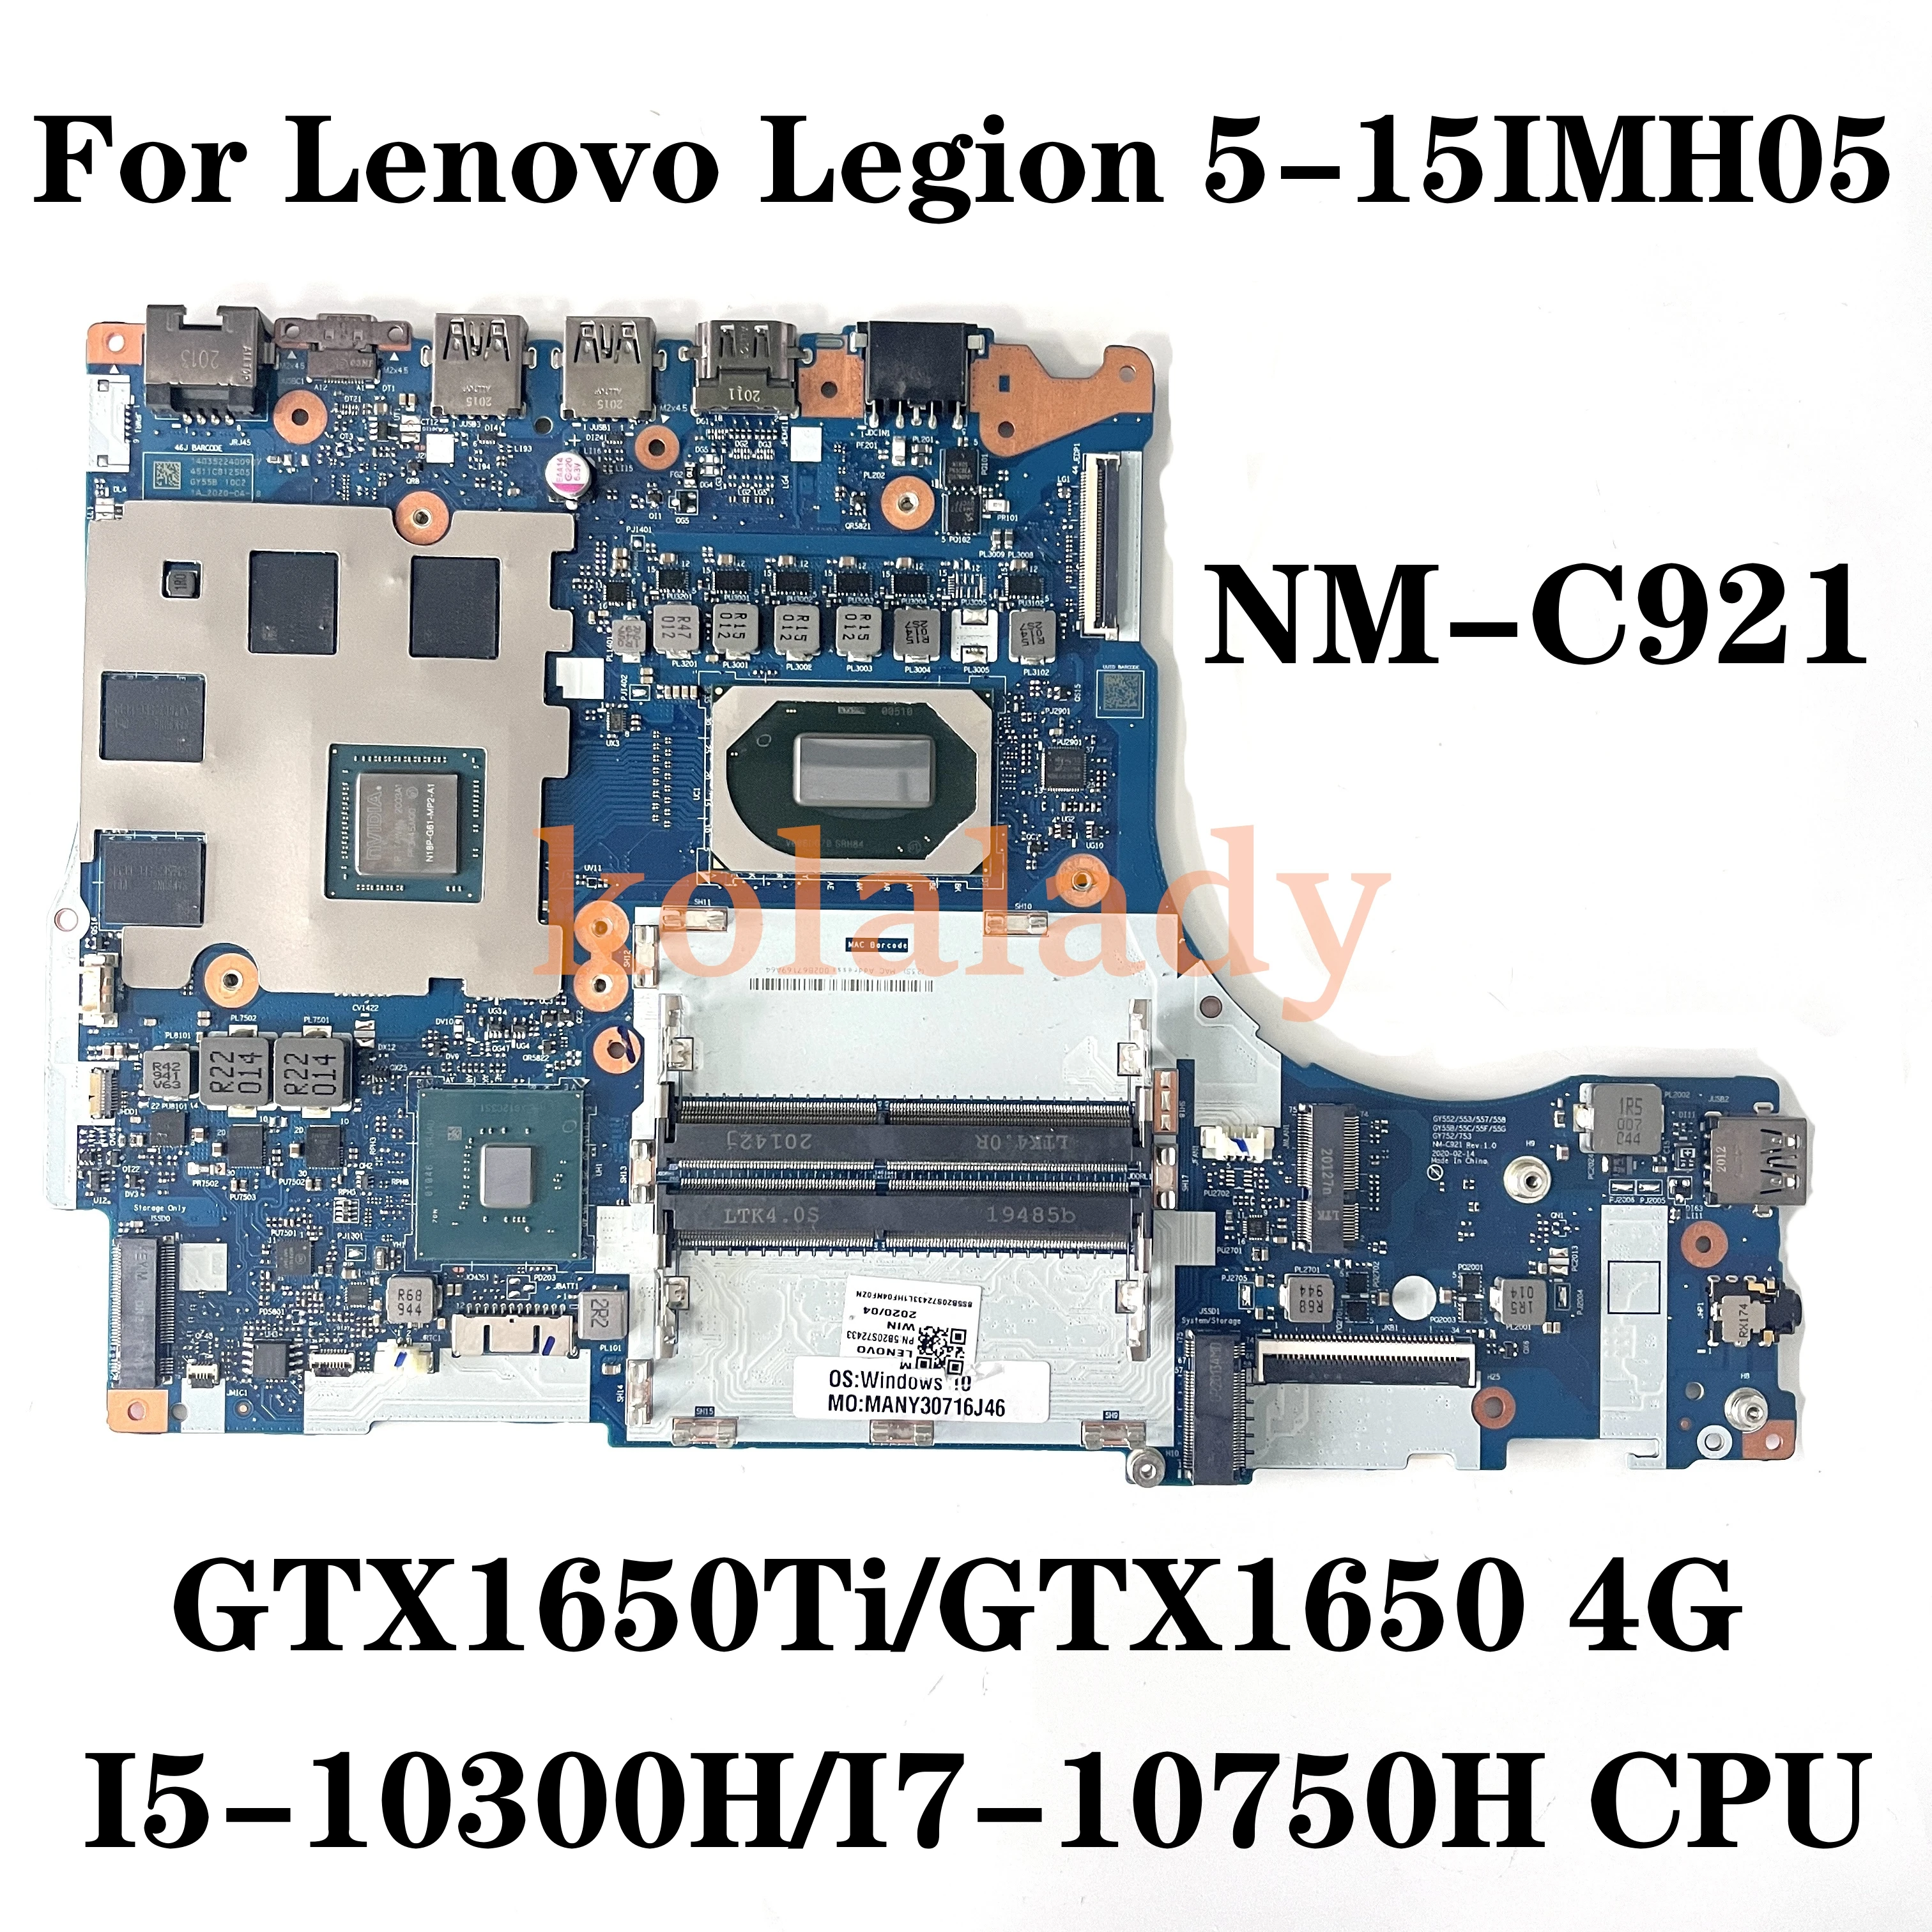 

NM-C921 Mainboard For Lenovo Legion 5-15IMH05 Laptop Motherboard W/ CPU I5-10300H/I7-10750H GPU GTX1650/GTX1650Ti 4G 5B20S72437